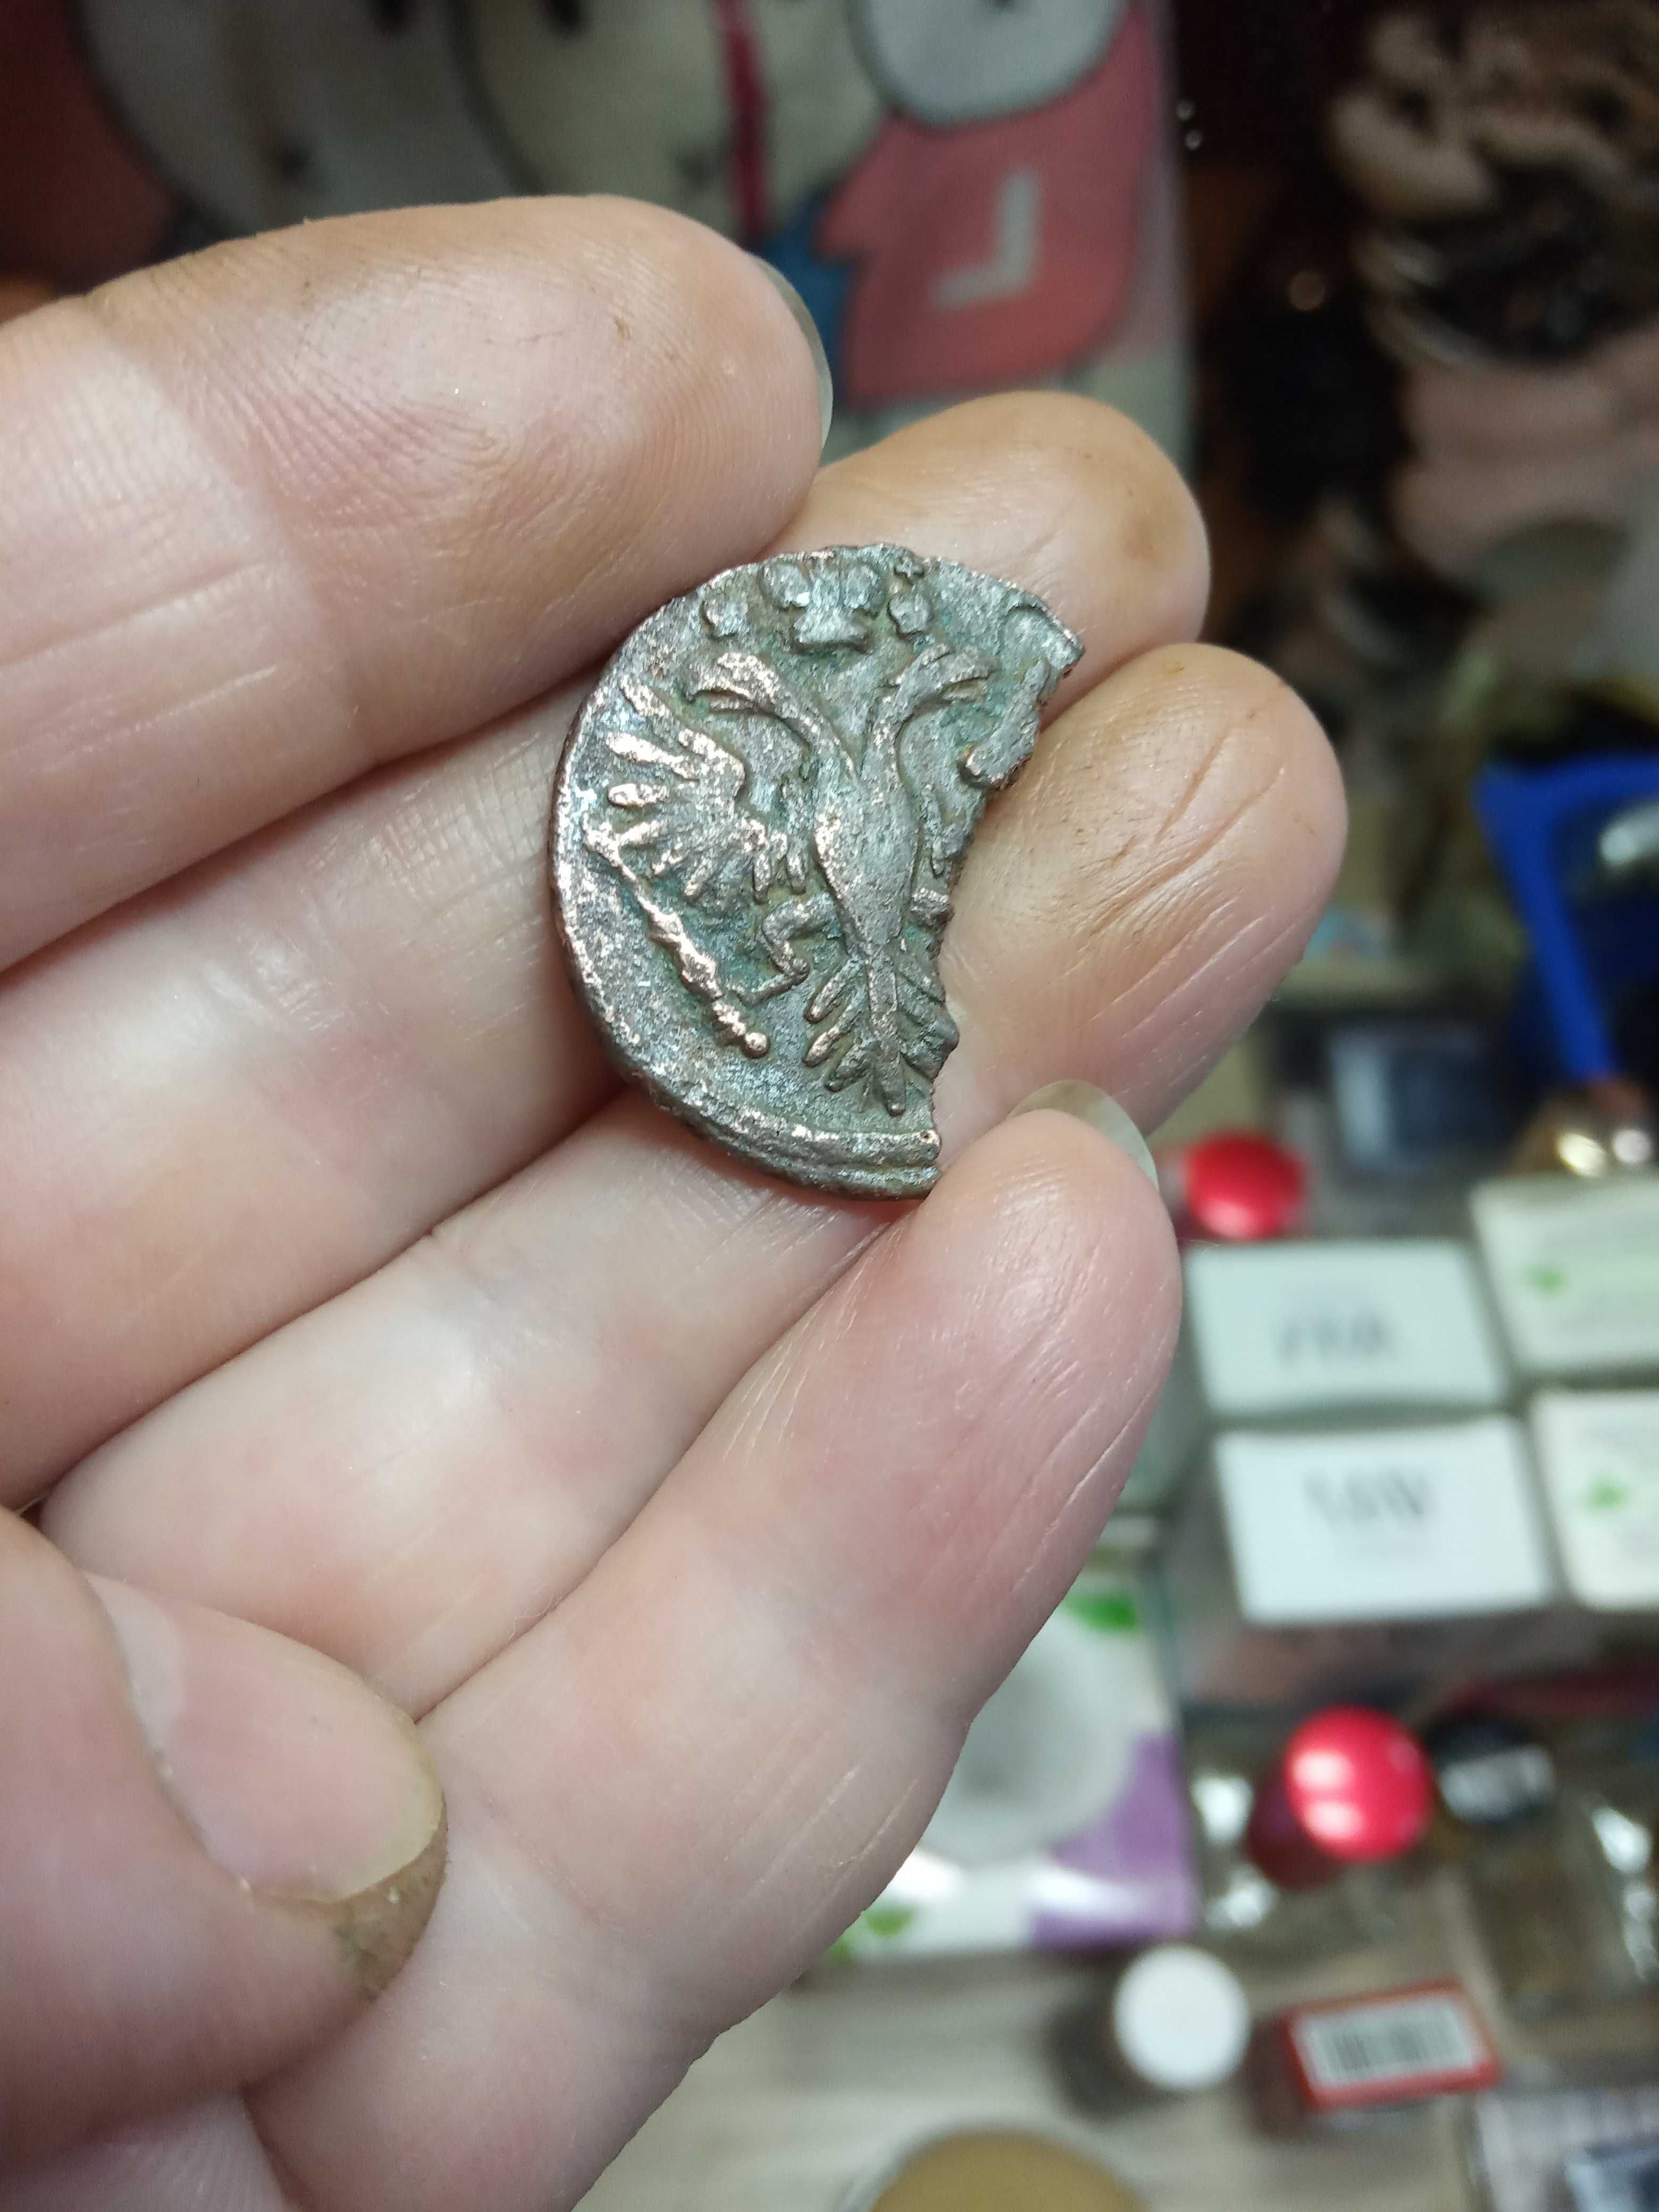 Старовинна монета